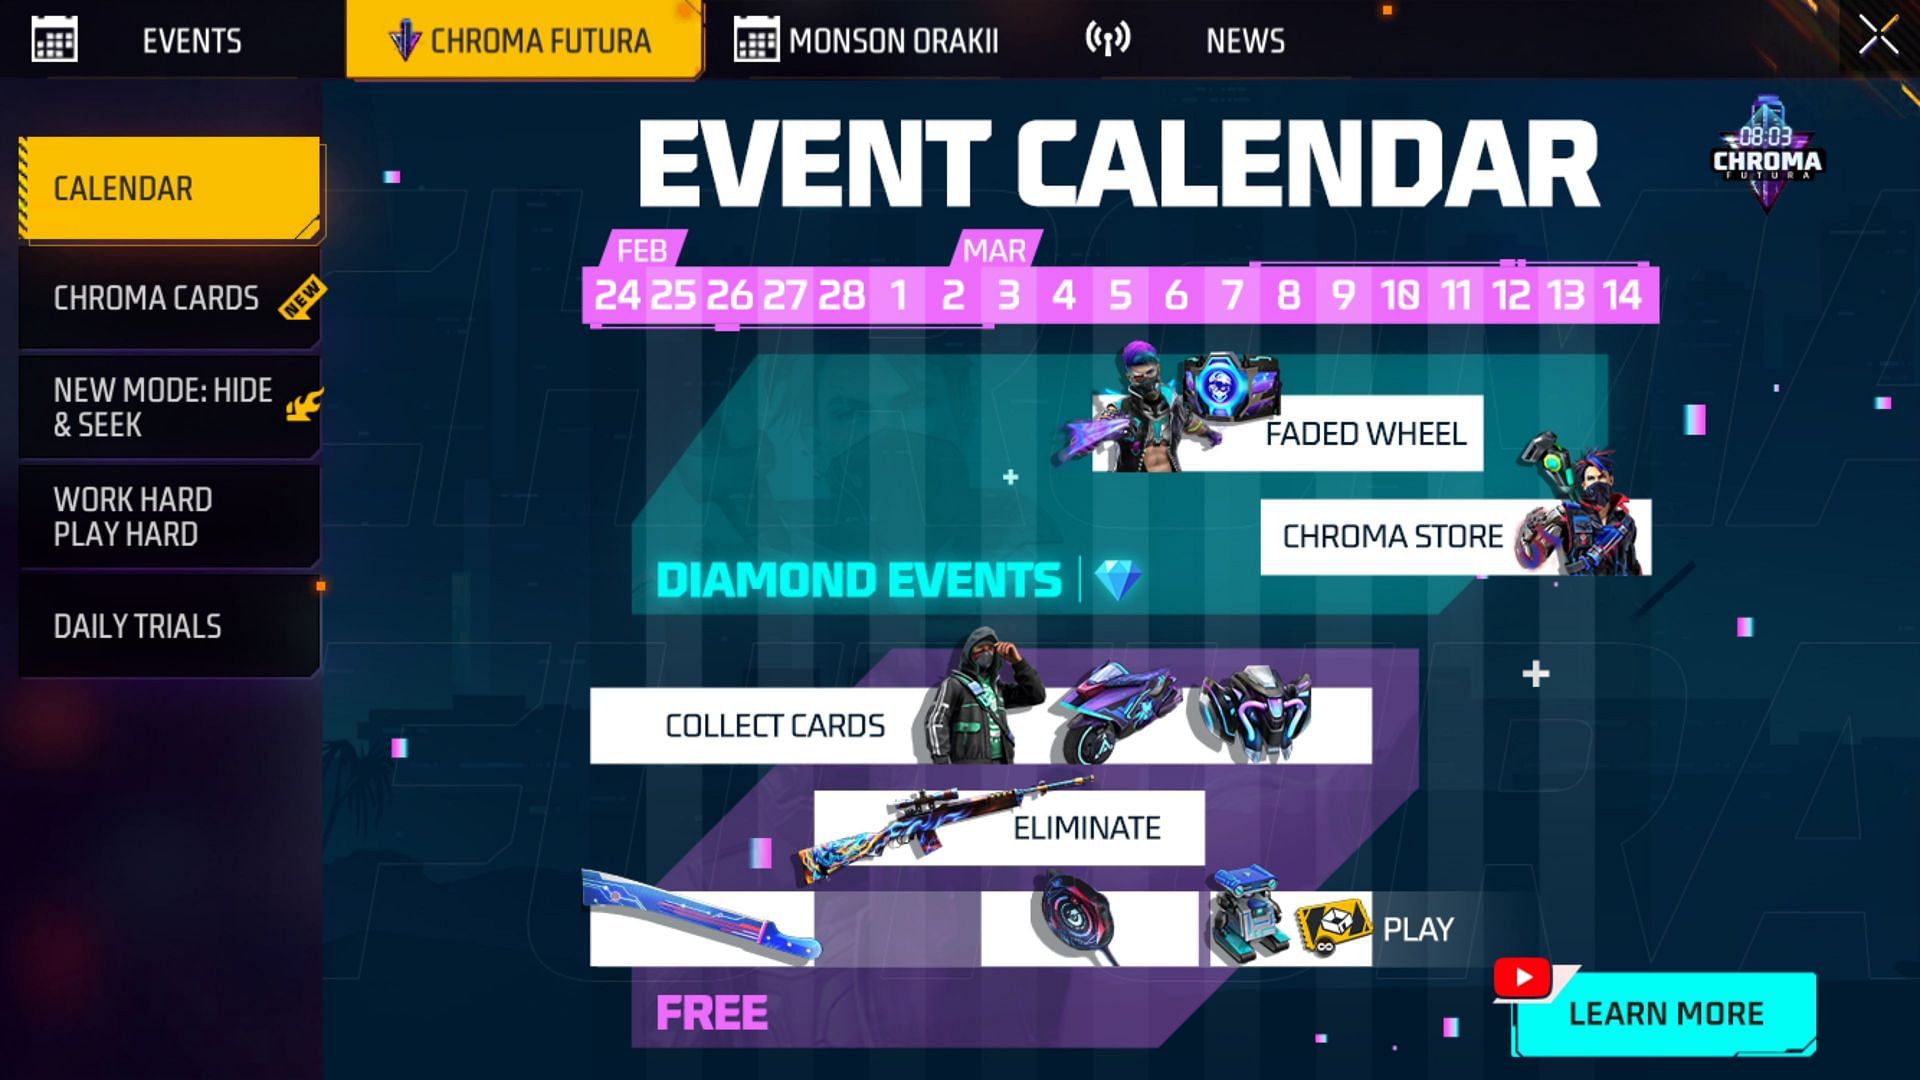 The Chroma Futura event calendar in Free Fire MAX (Image via Garena)